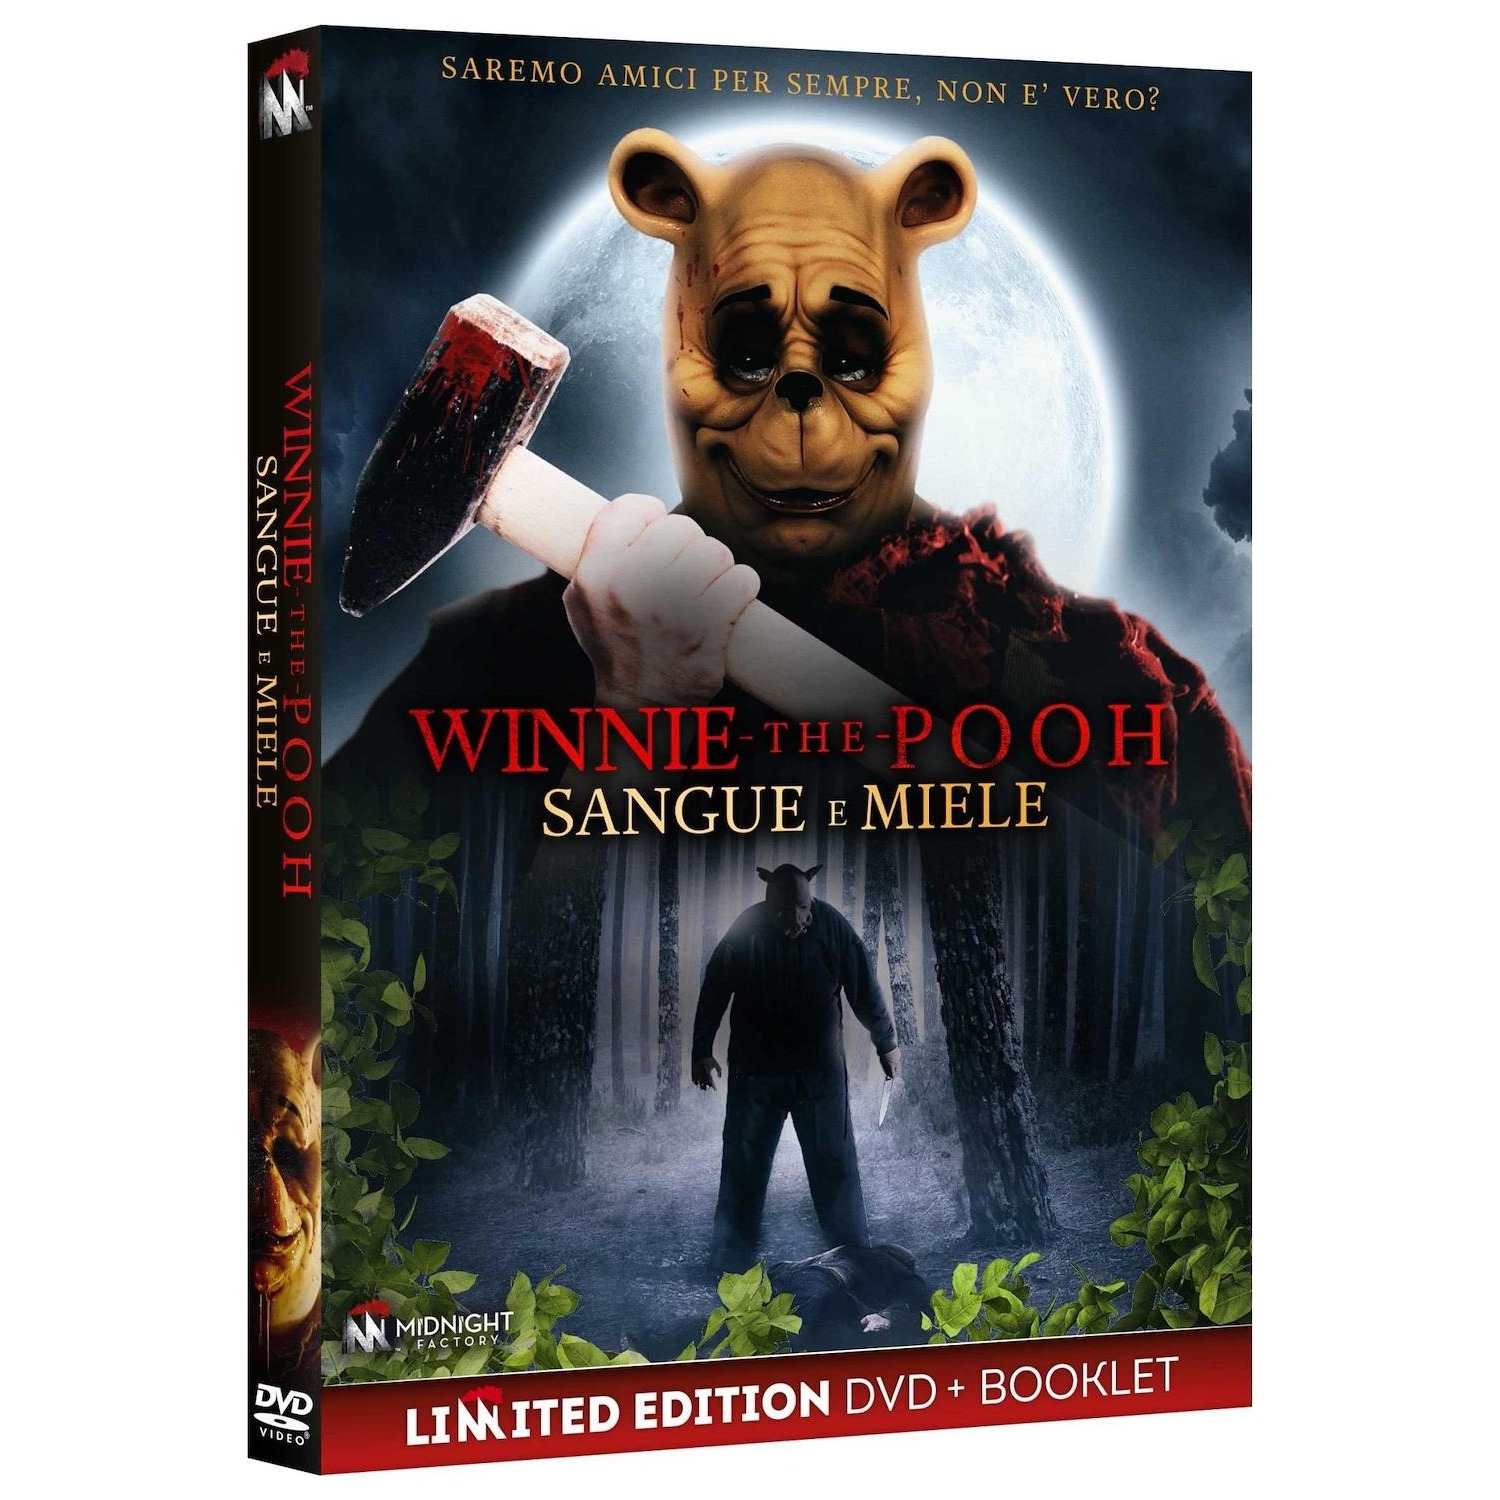 Immagine per DVD Winnie The Pooh: Sangue e Miele da DIMOStore